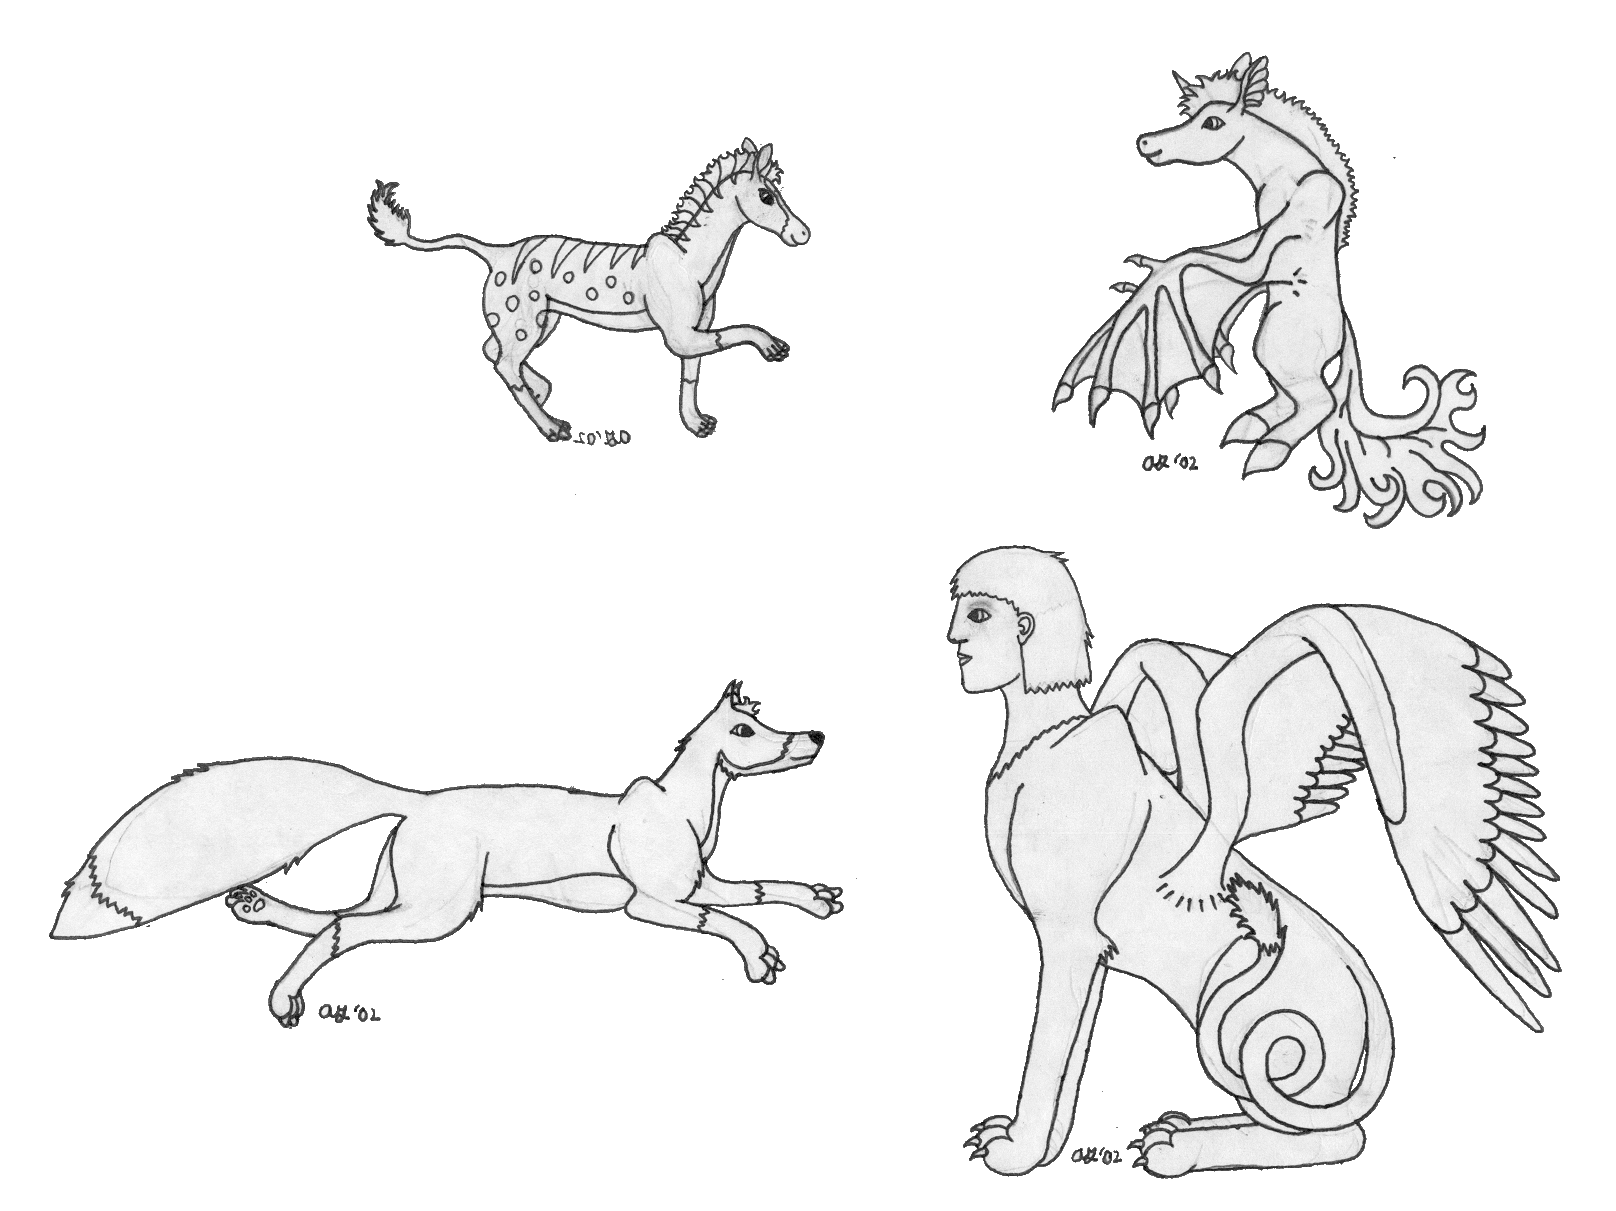 Critters 6: Sphinx, et al